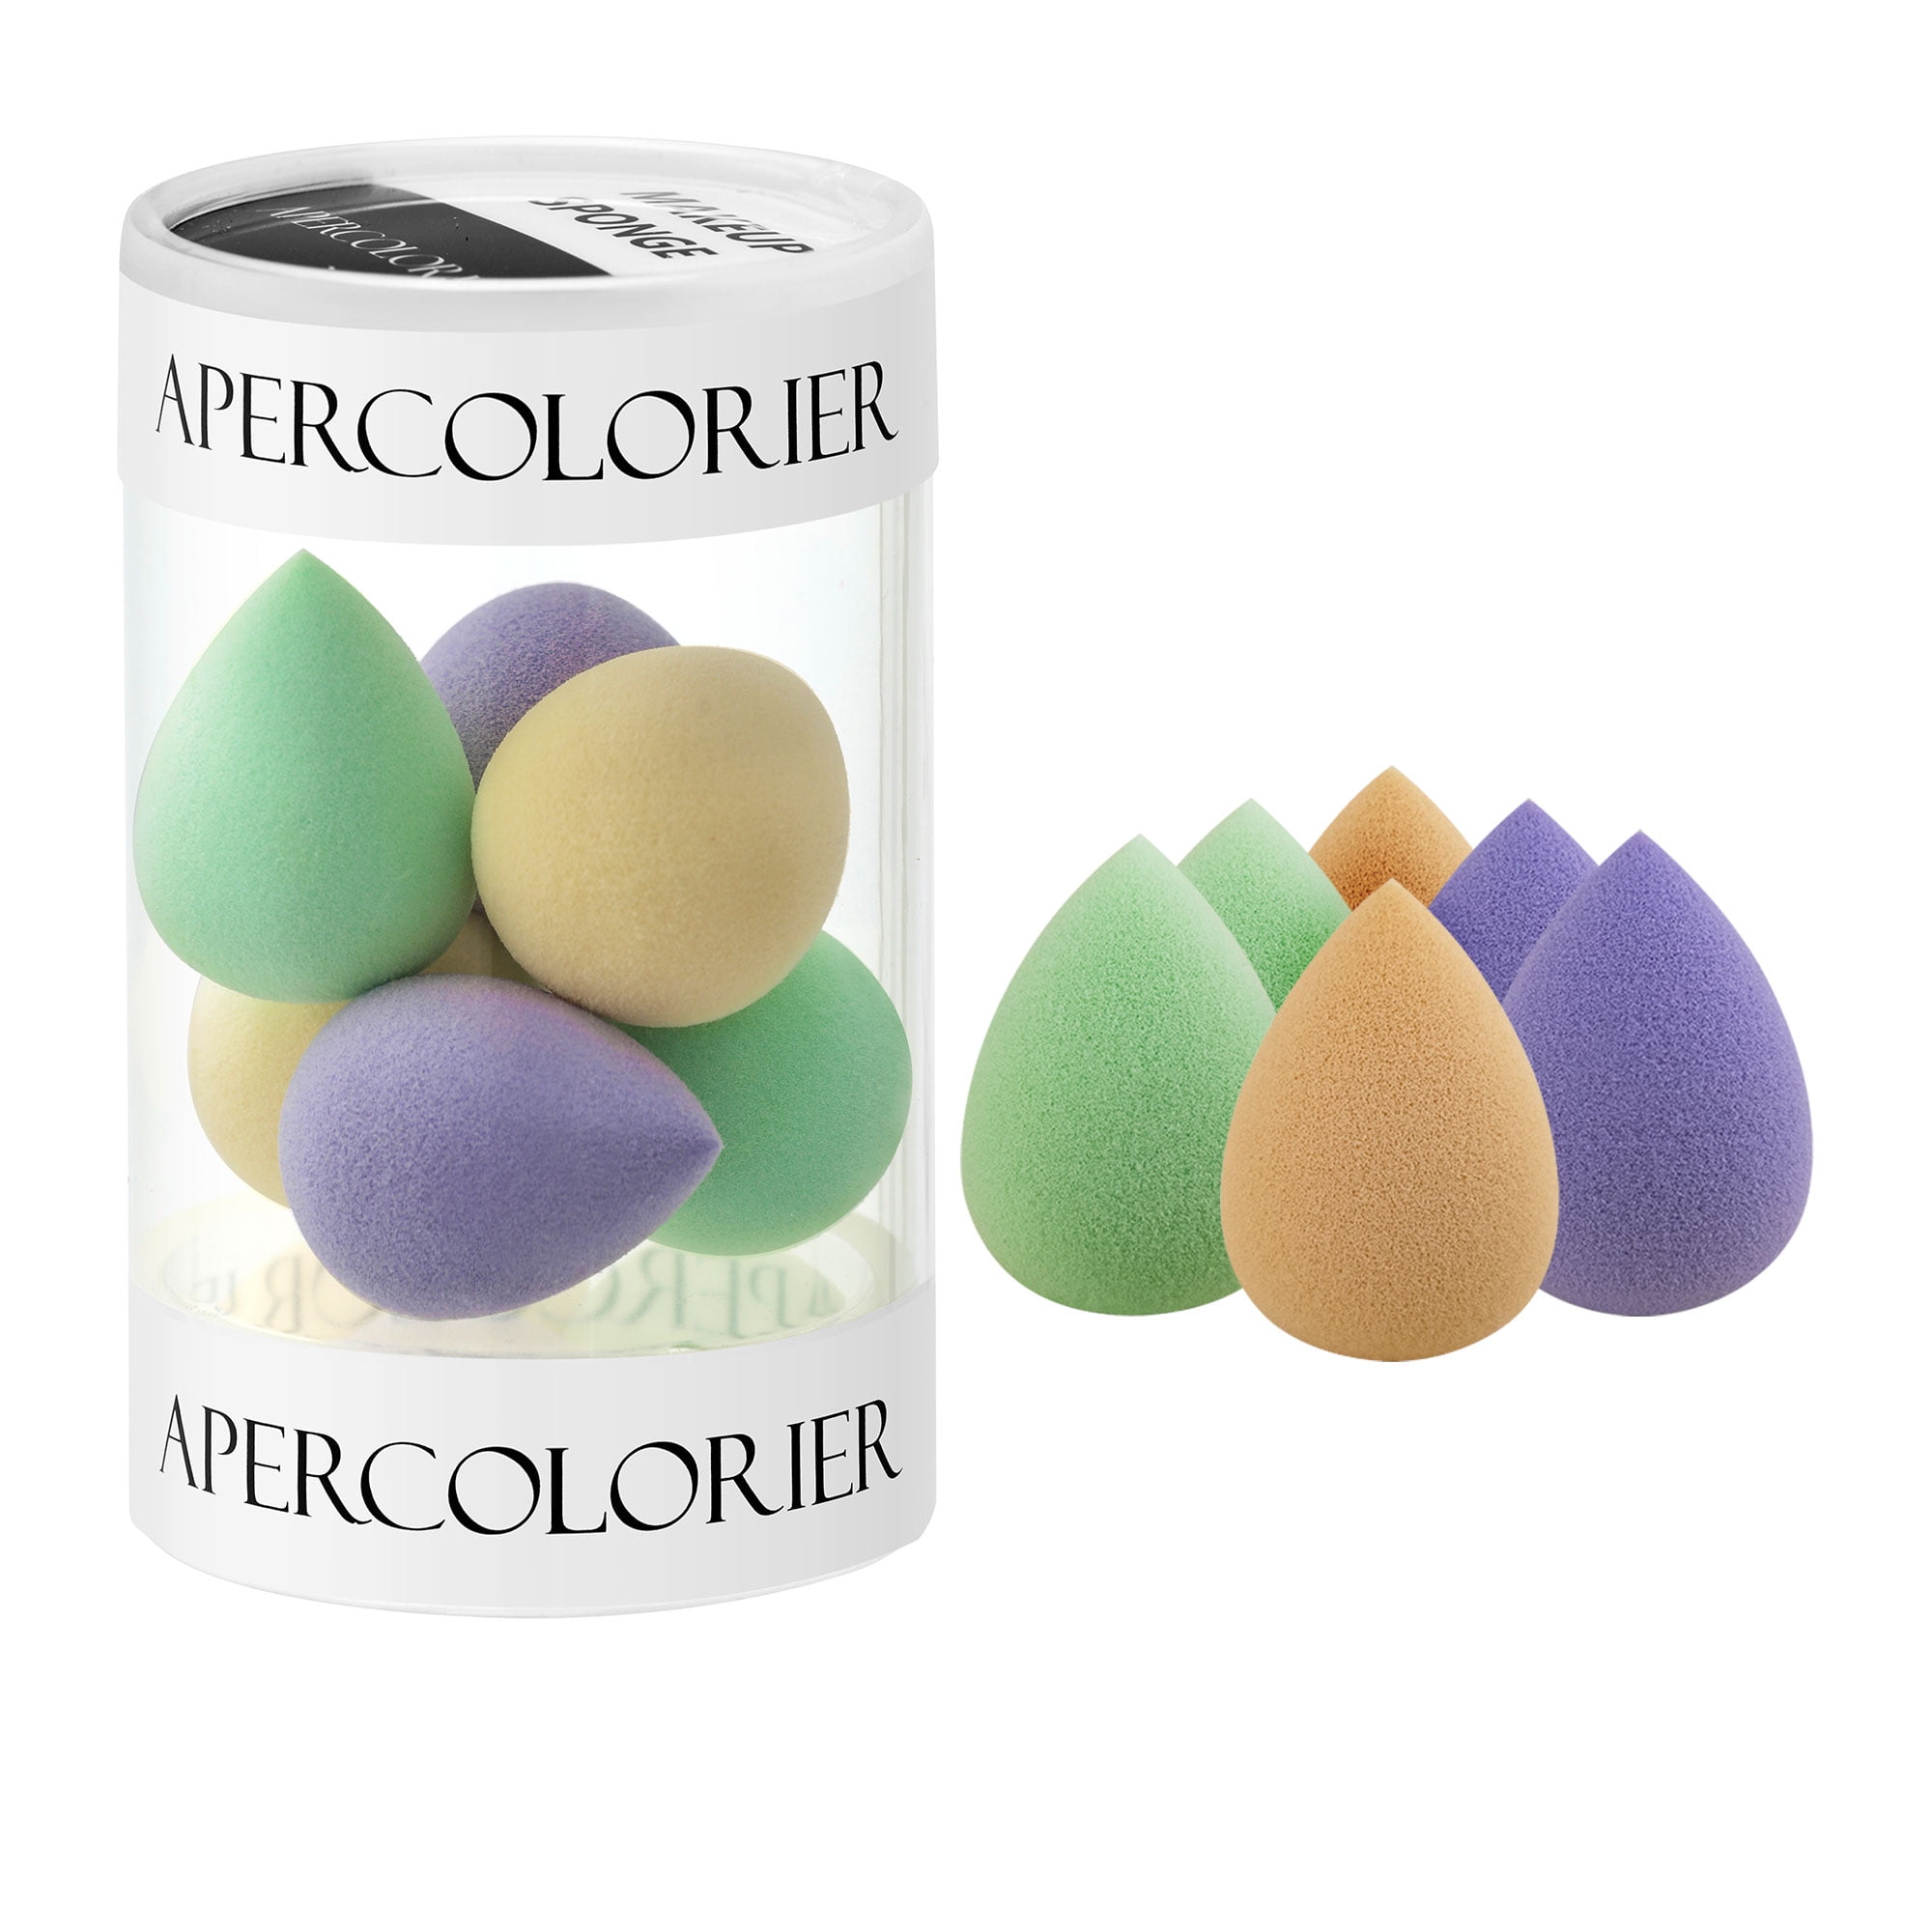 Apercolorier Mini Beauty Makeup Sponge Blender Eyes , Makeup Sponges Under 6 Pcs,Latex Free. - Walmart.com